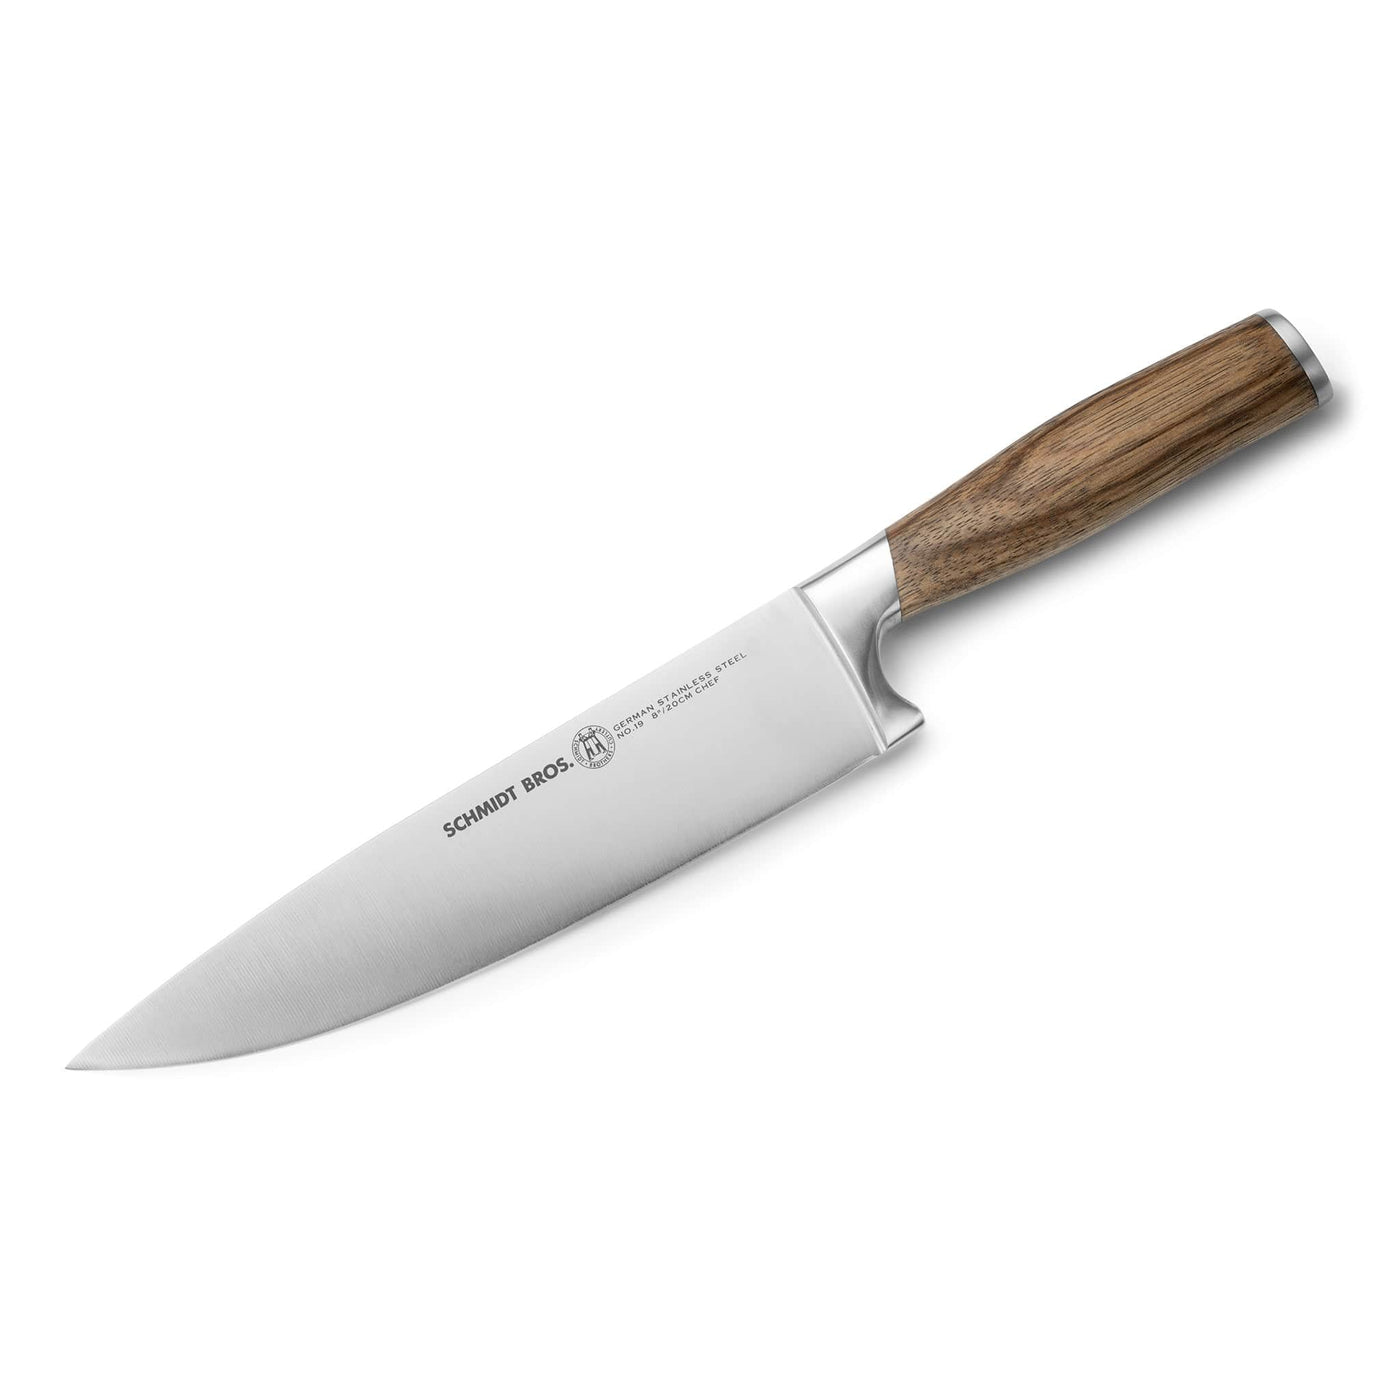 Schmidt Bros.Knives - Carbon 6 15 piece knife block set - household items -  by owner - housewares sale - craigslist